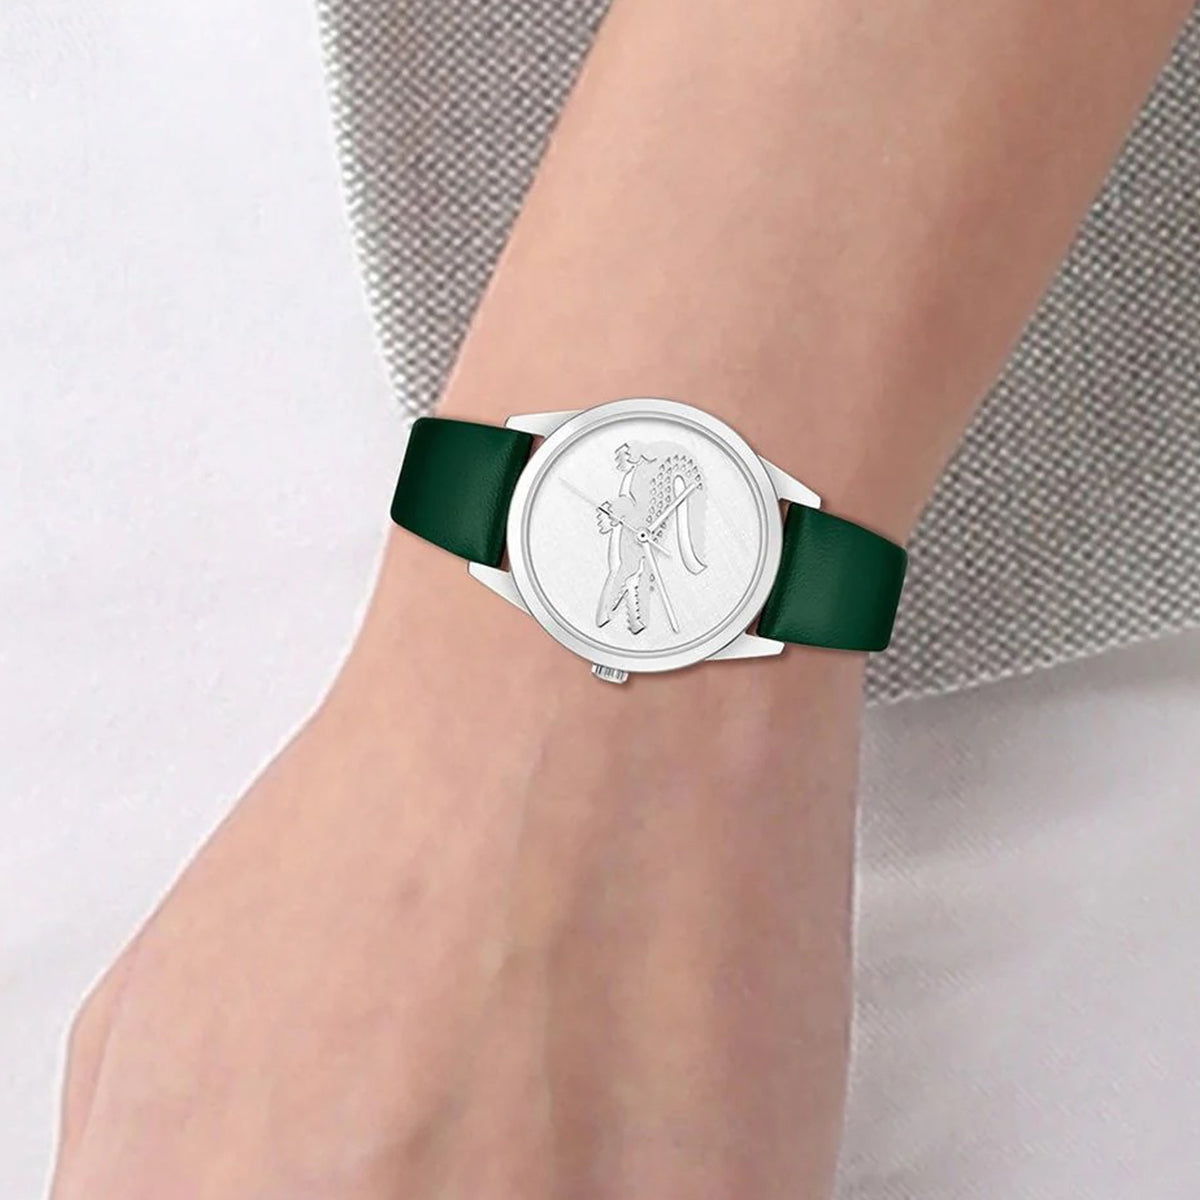 Lacoste - Ladycroc Mini Watch - 2001262